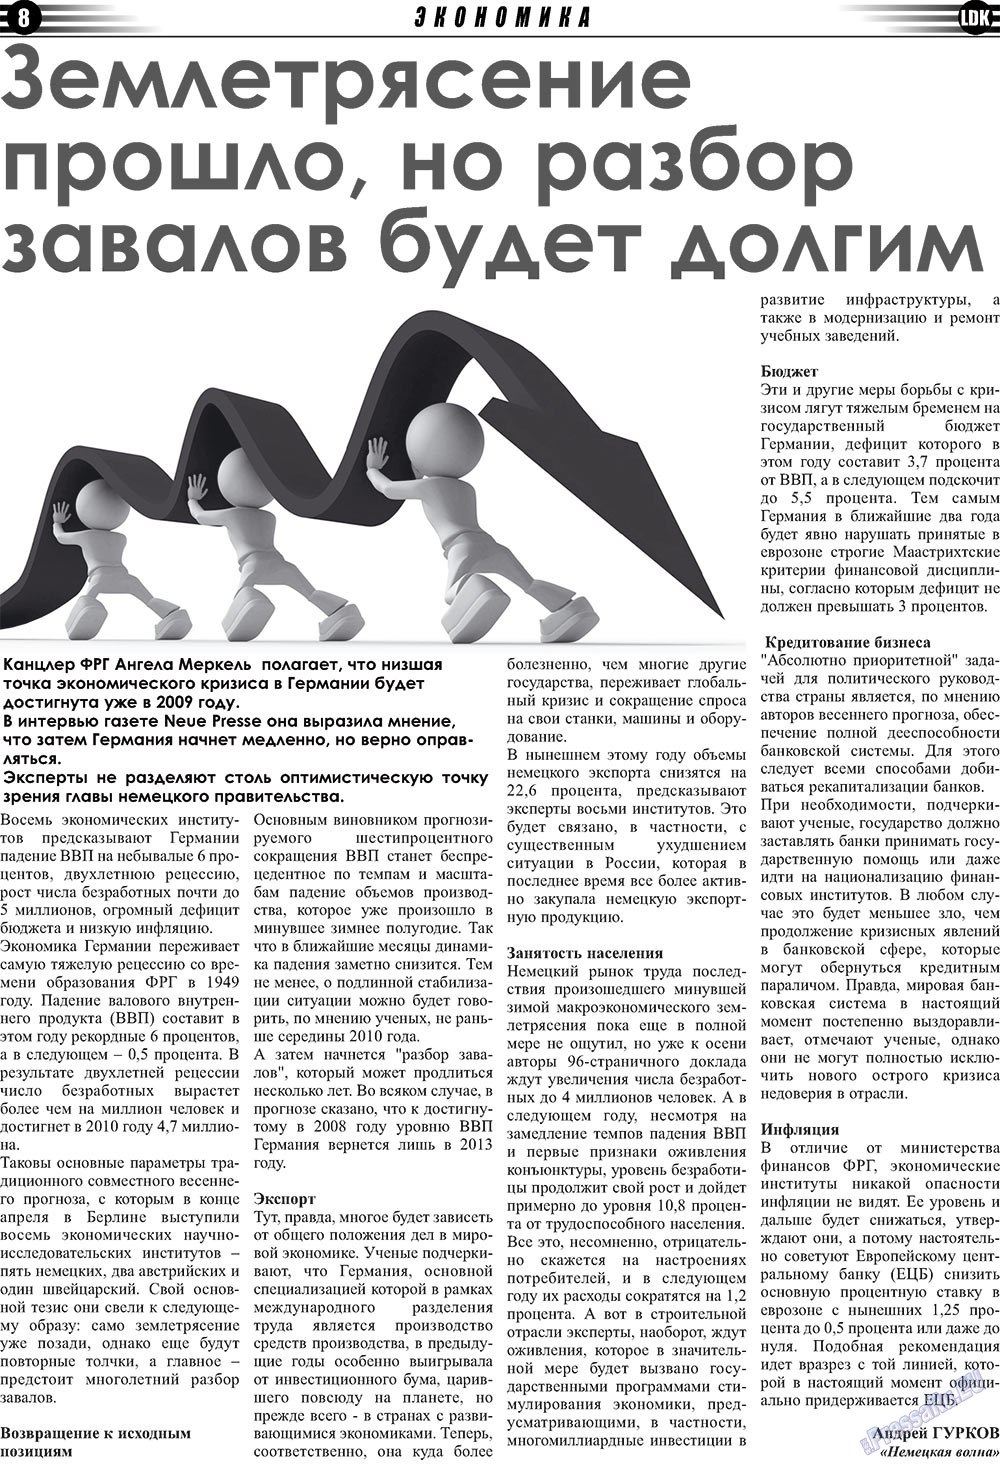 LDK по-русски, газета. 2009 №5 стр.8